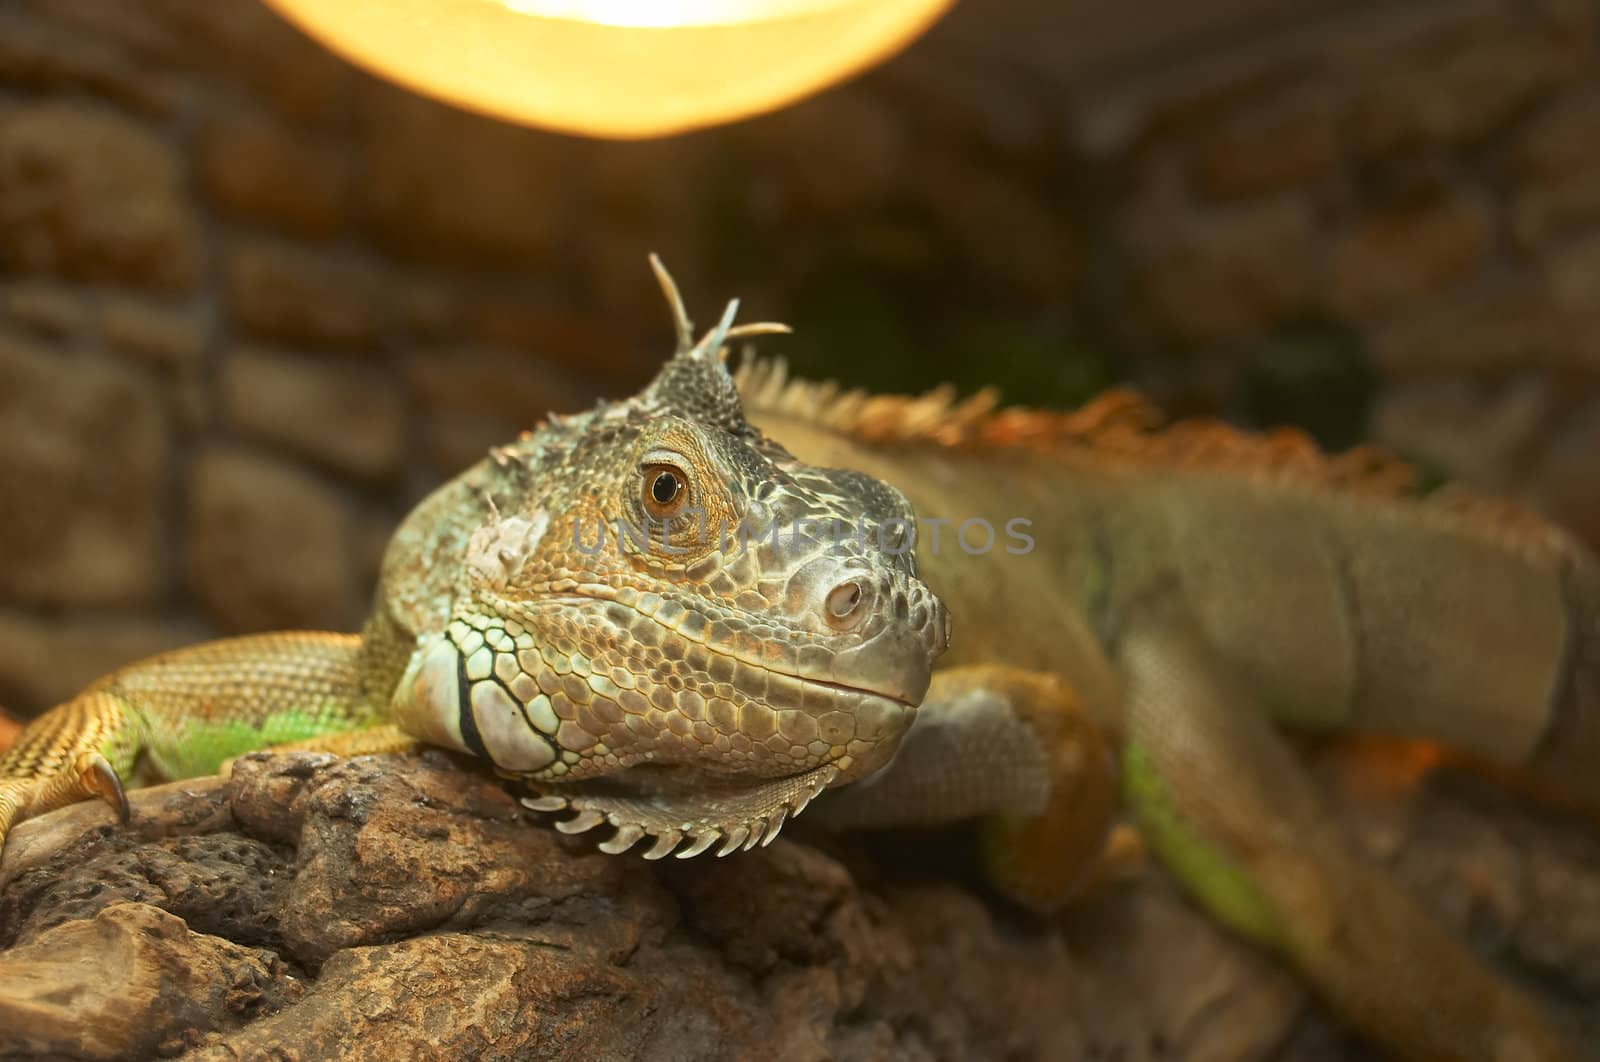 The big lizard in a terrarium by eglazov